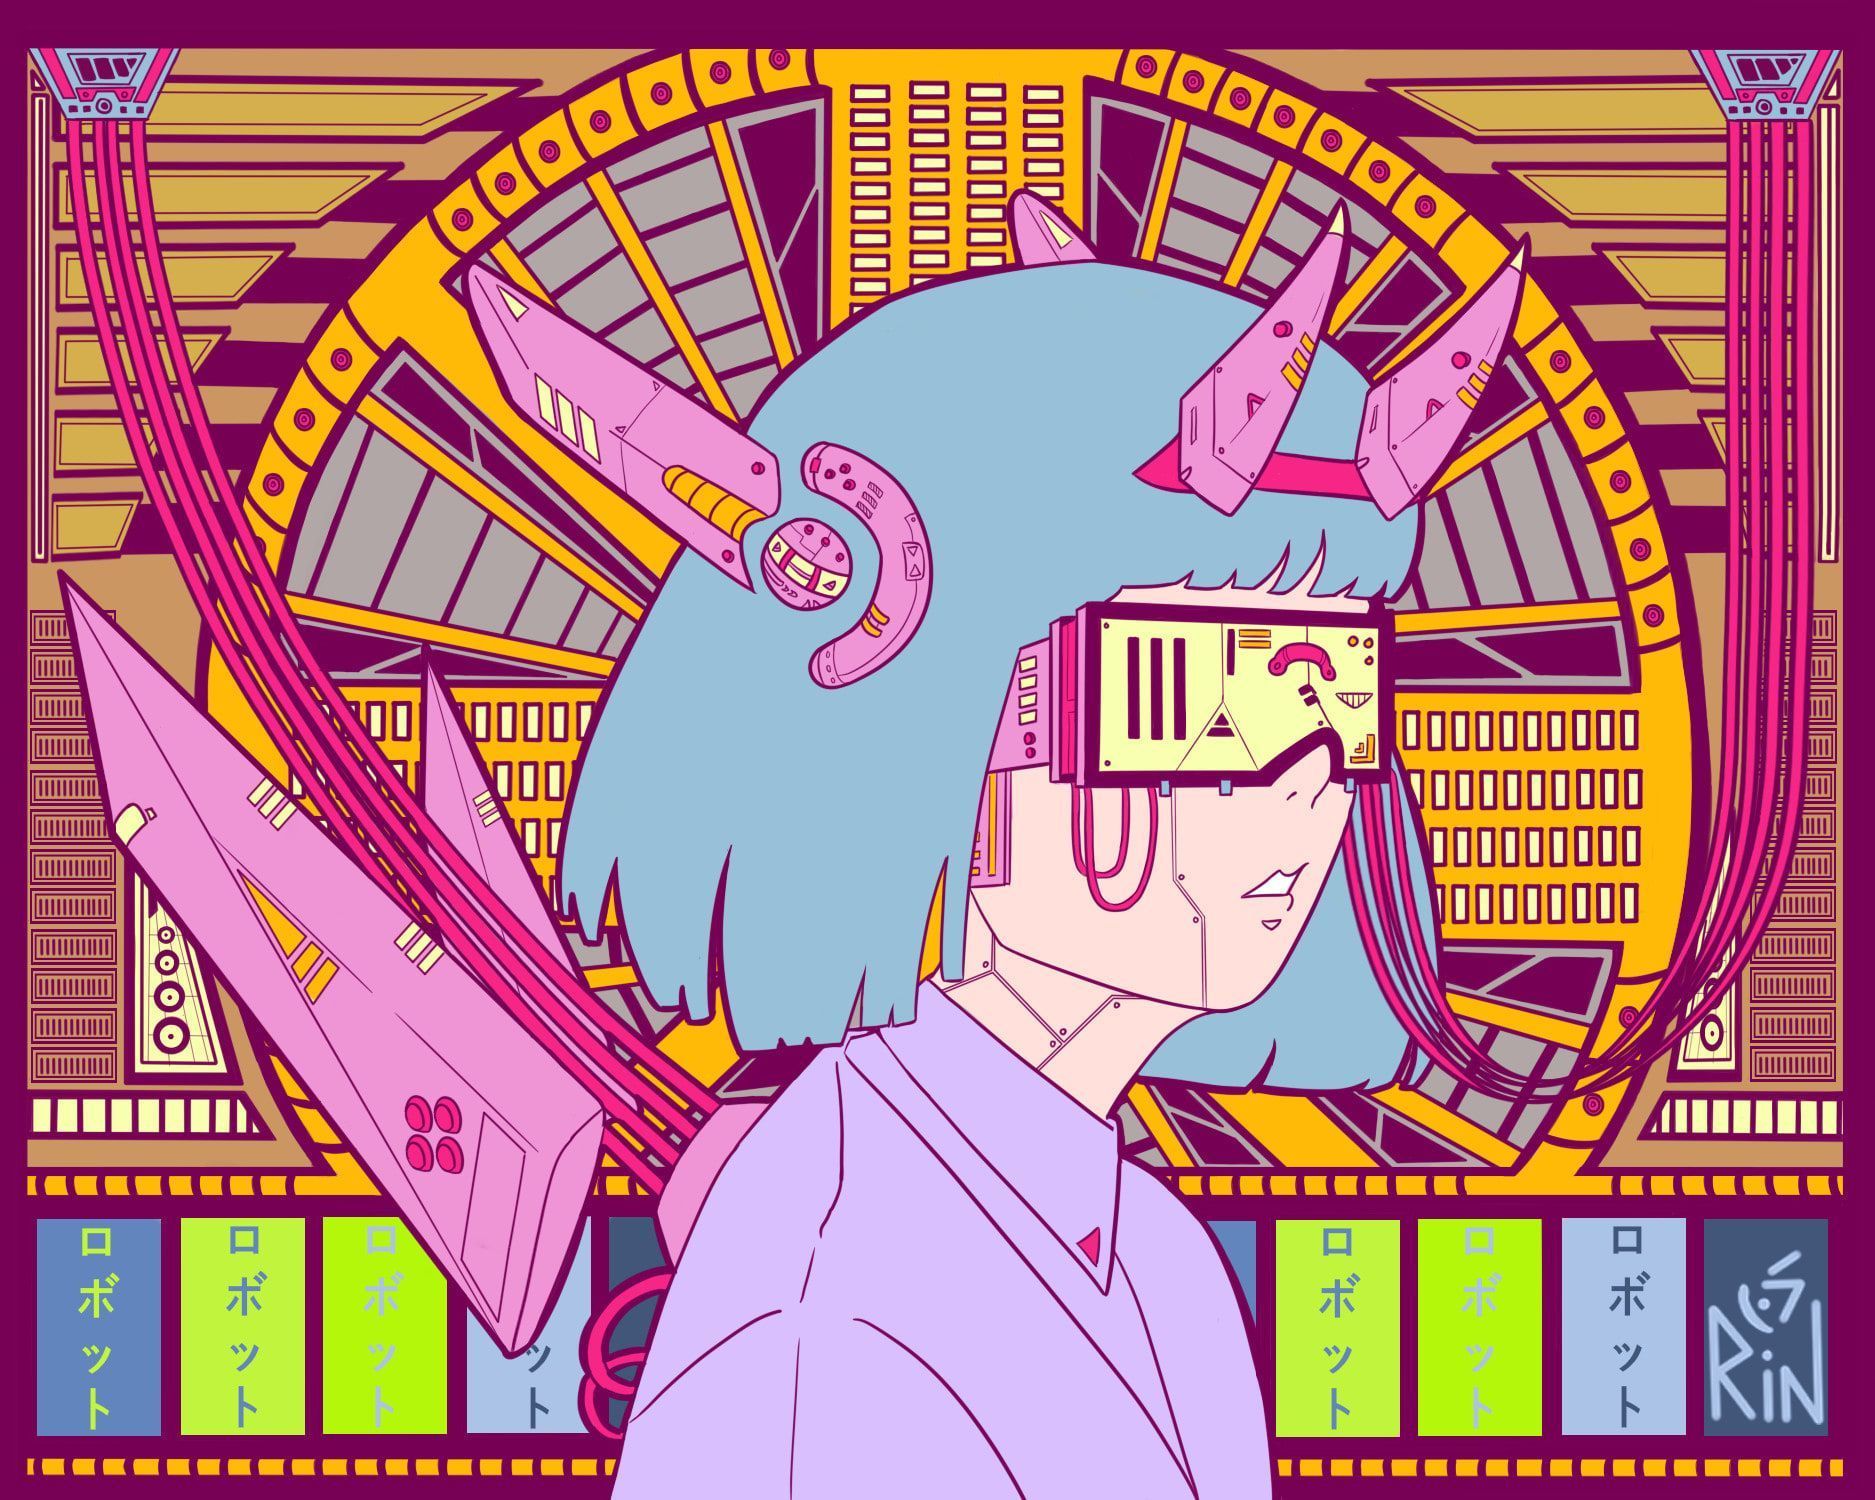 Do aesthetic japanese cyberpunk illustrations